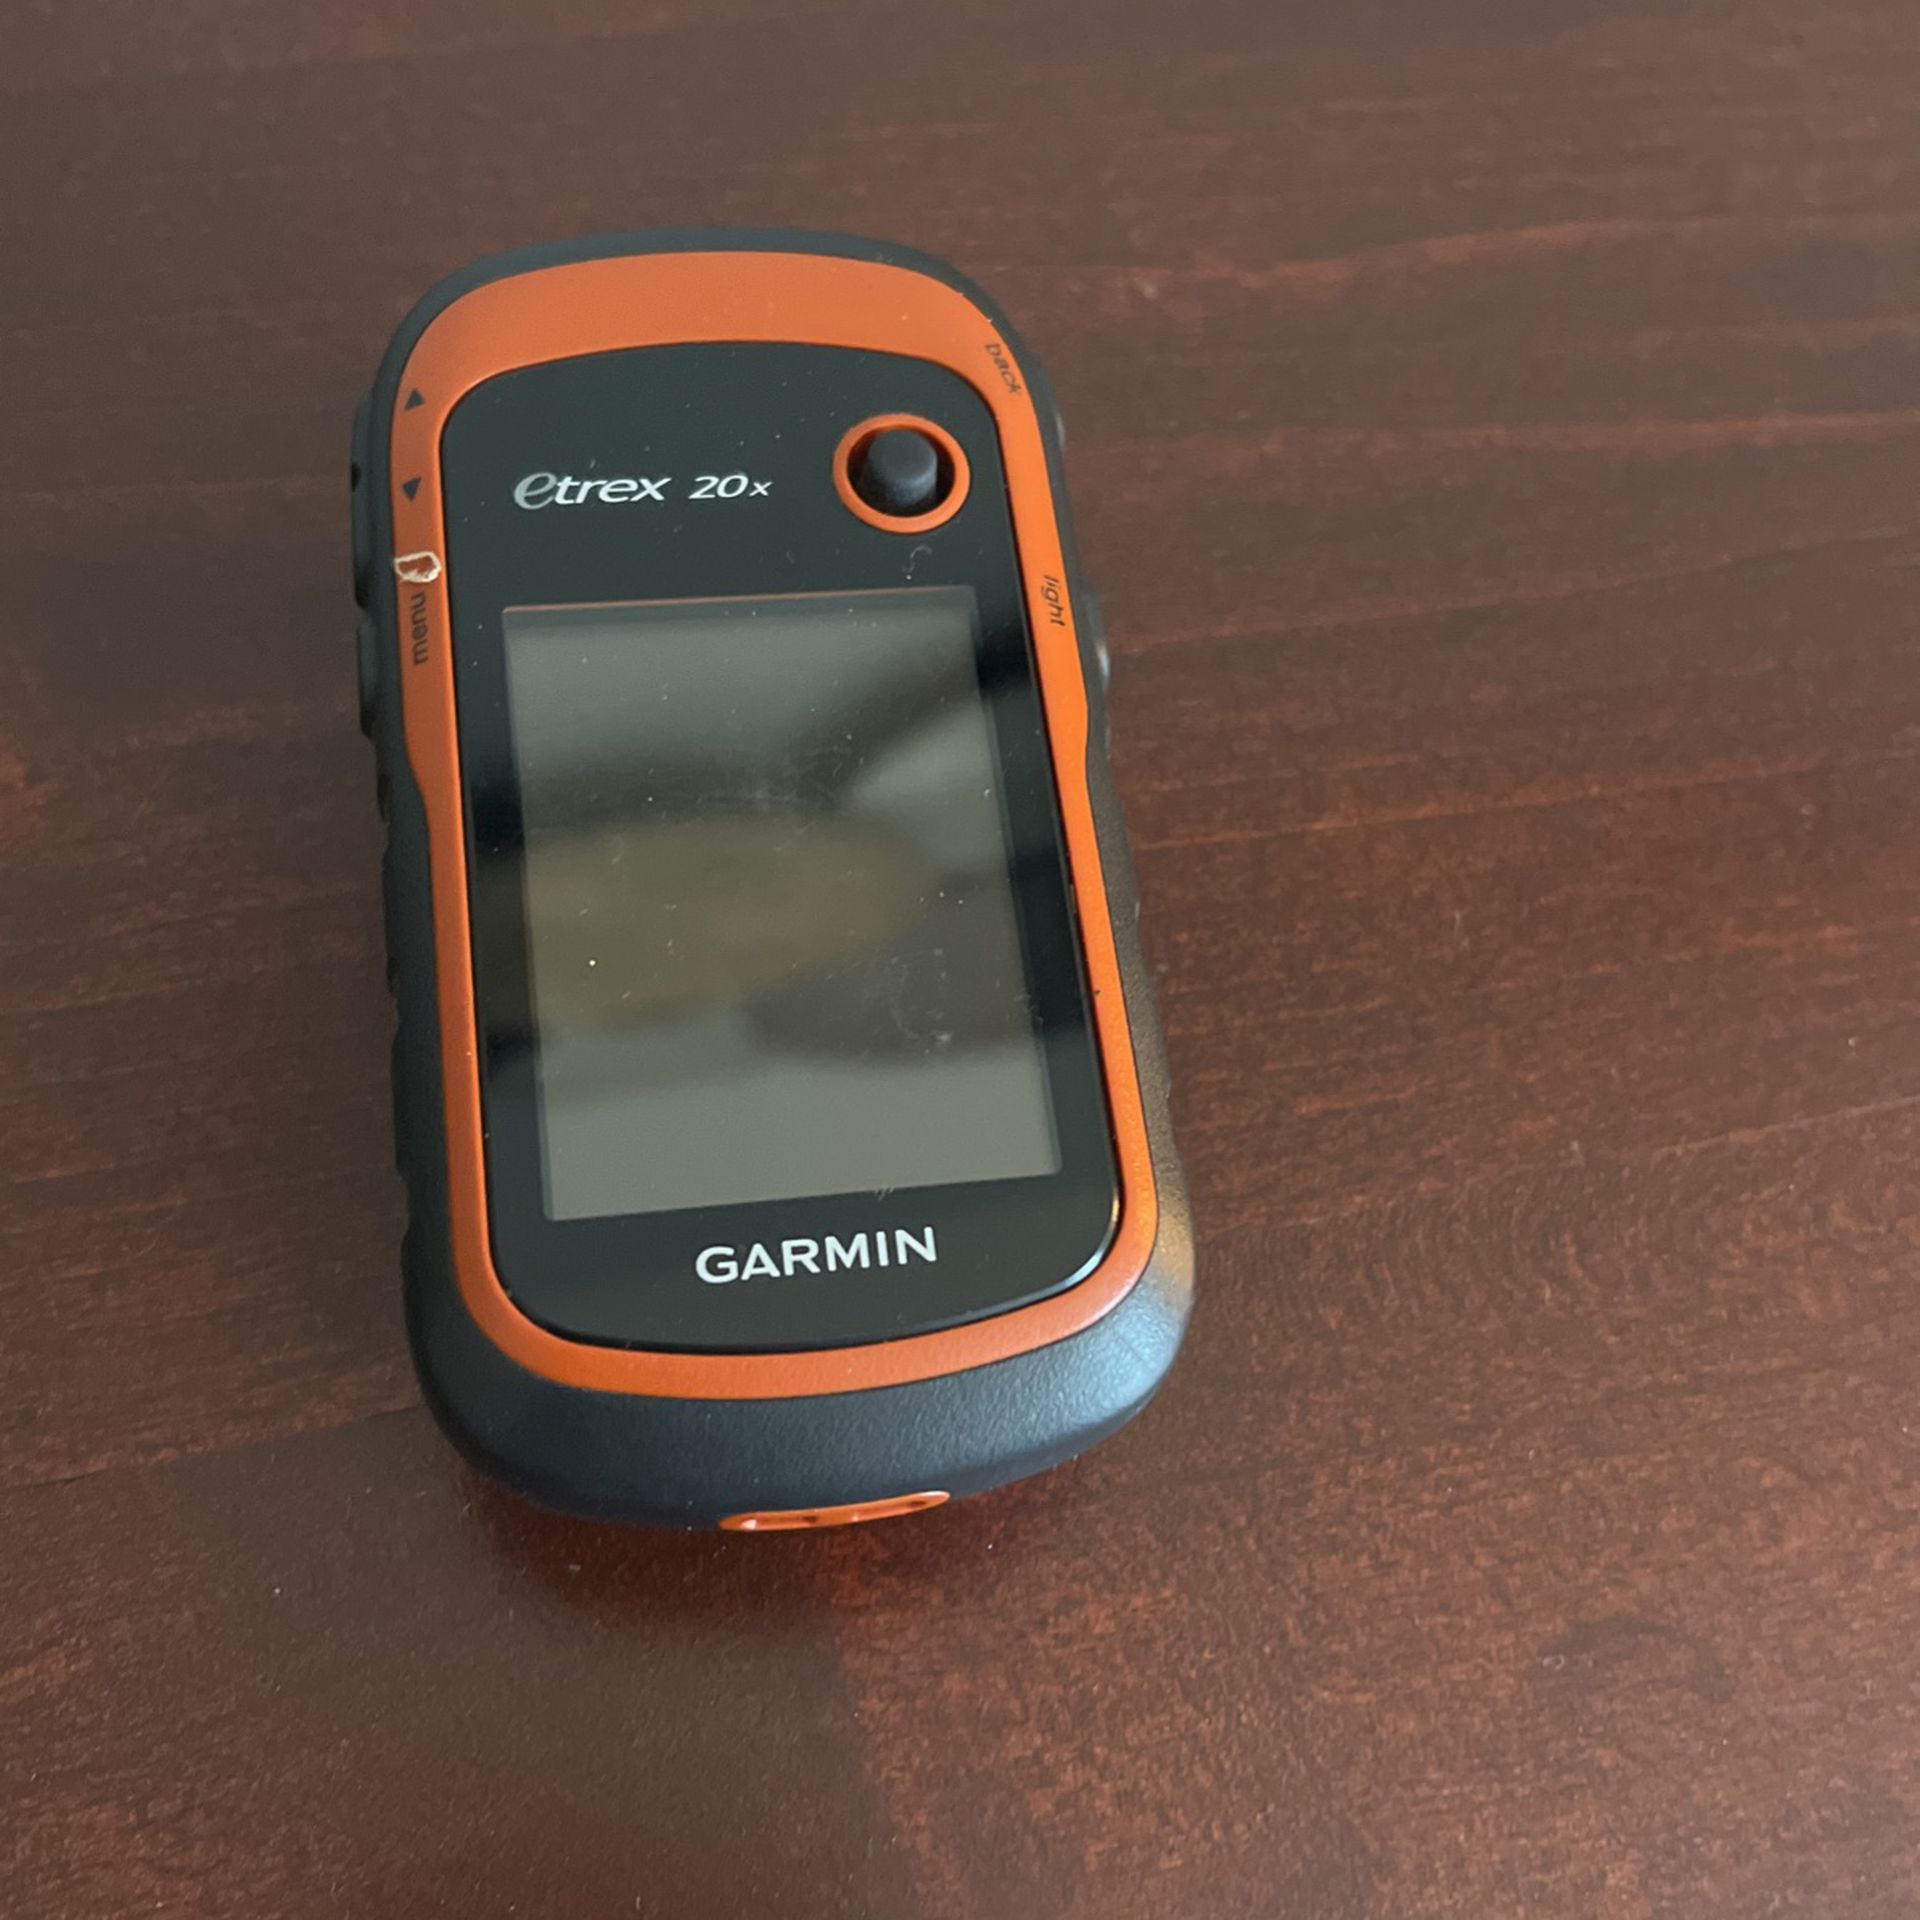 Garmin etrex 20x GPS (Like New) for in Tucson, AZ -